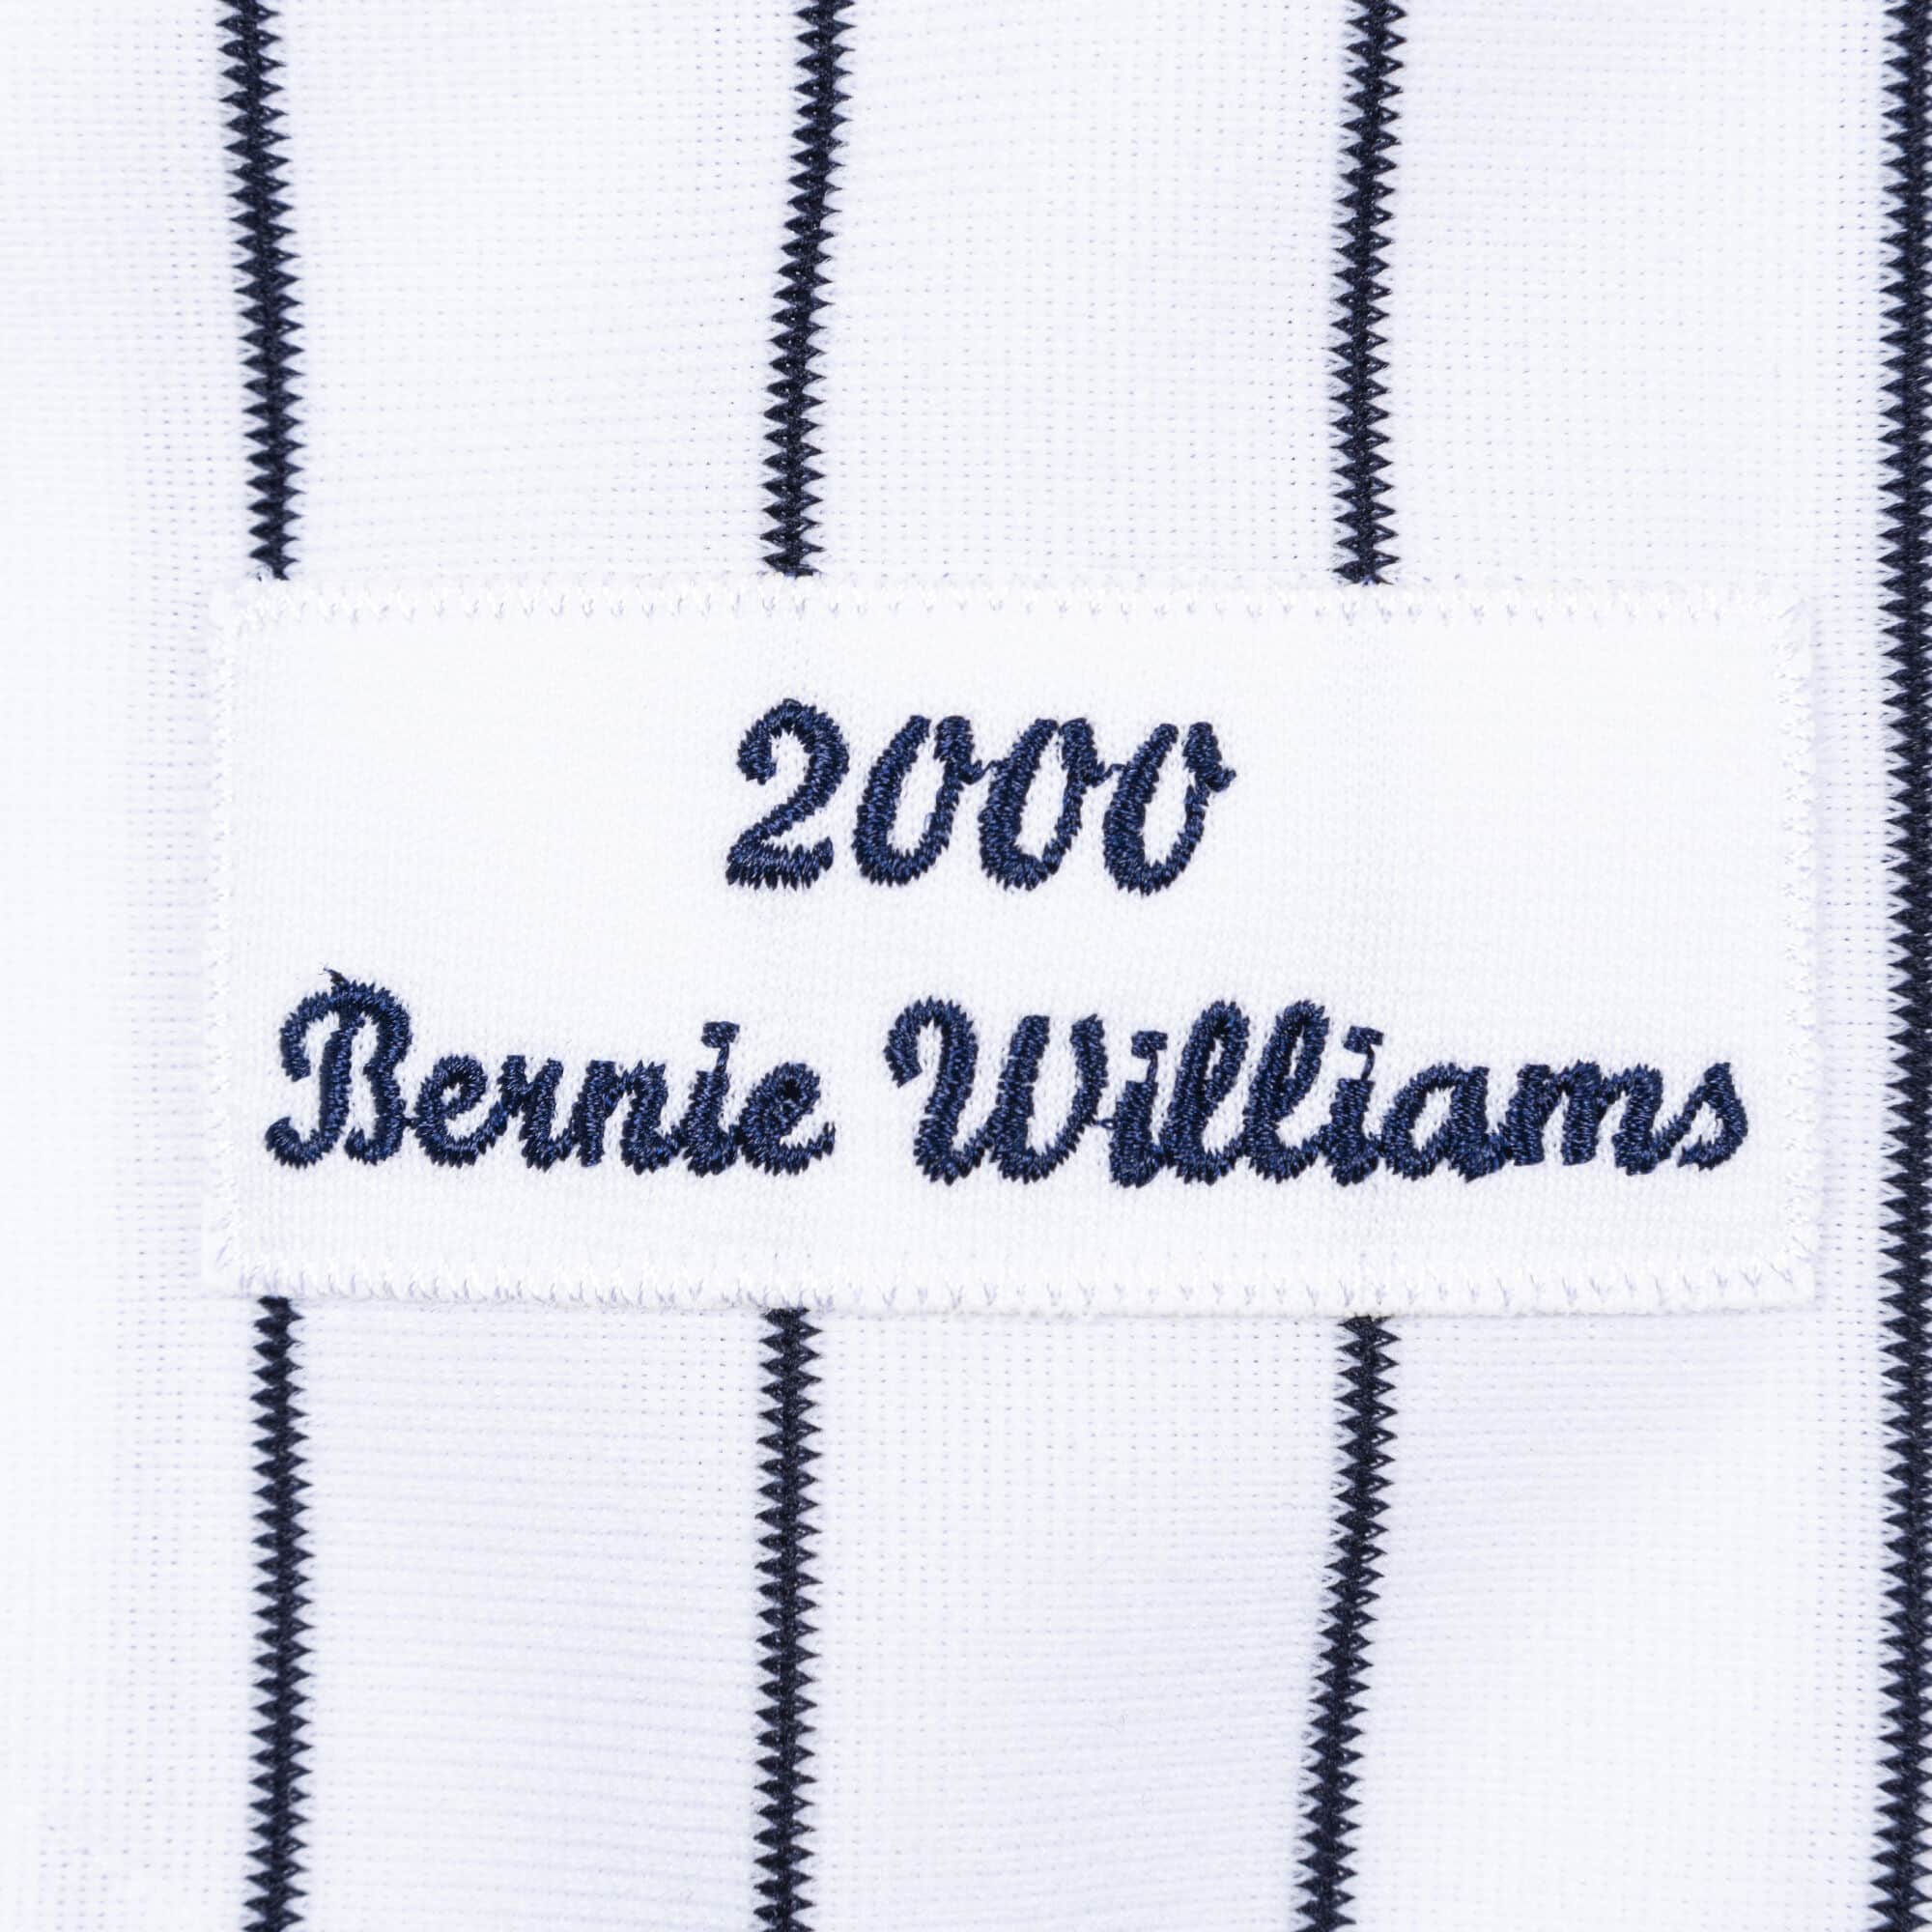 Bernie Williams New York Yankees Shirt - High-Quality Printed Brand